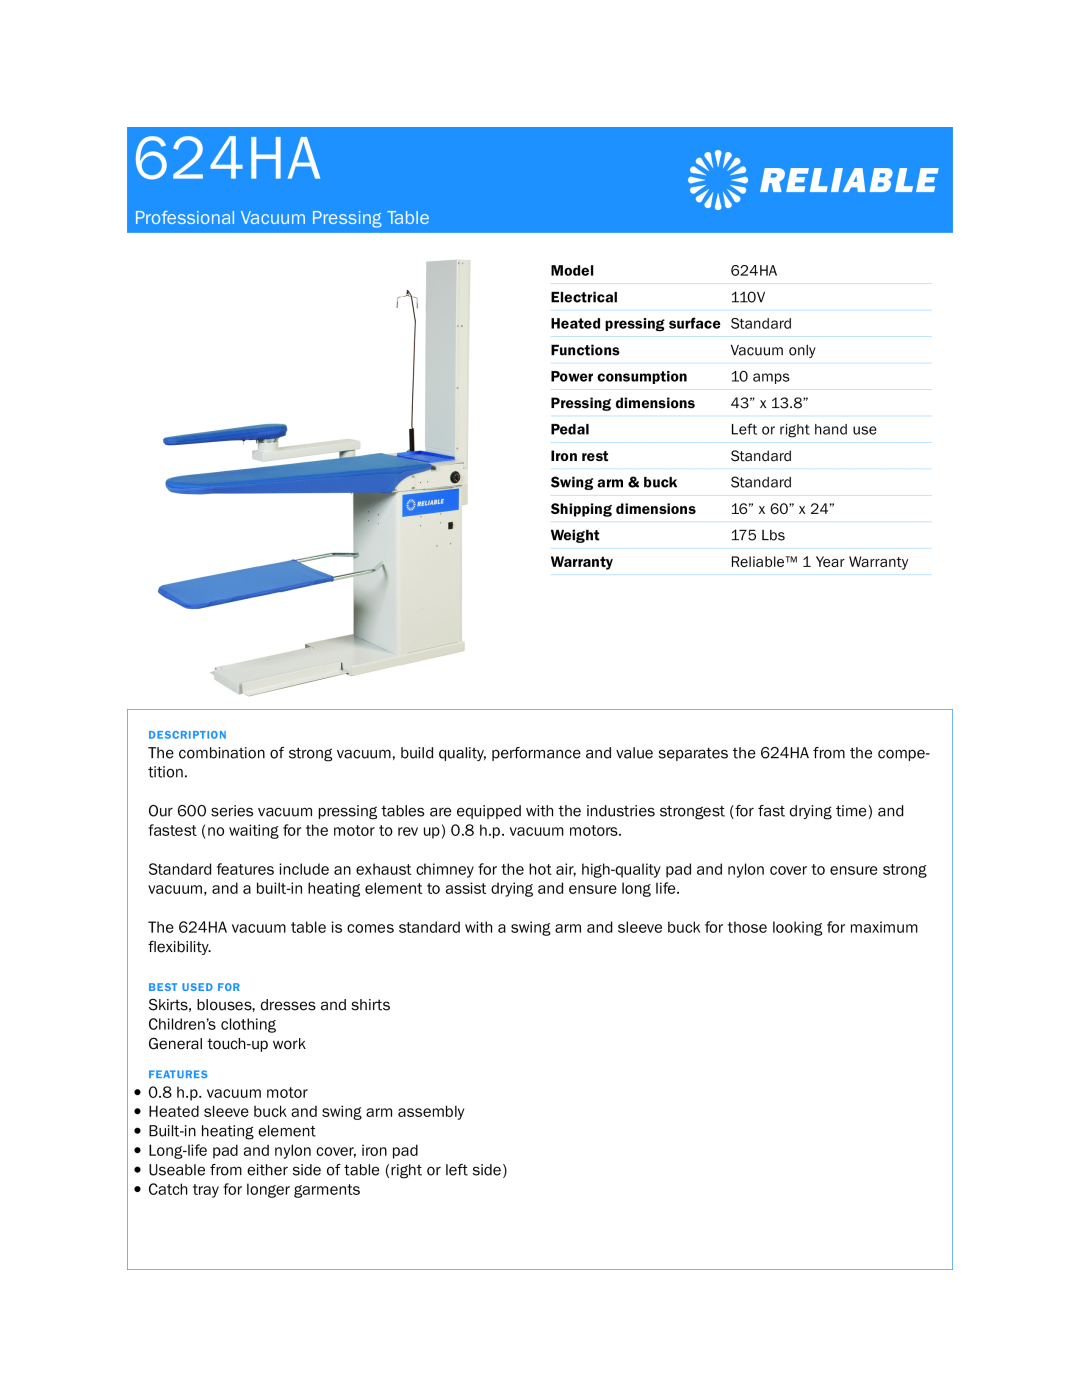 Reliable 624HA dimensions Professional Vacuum Pressing Table 